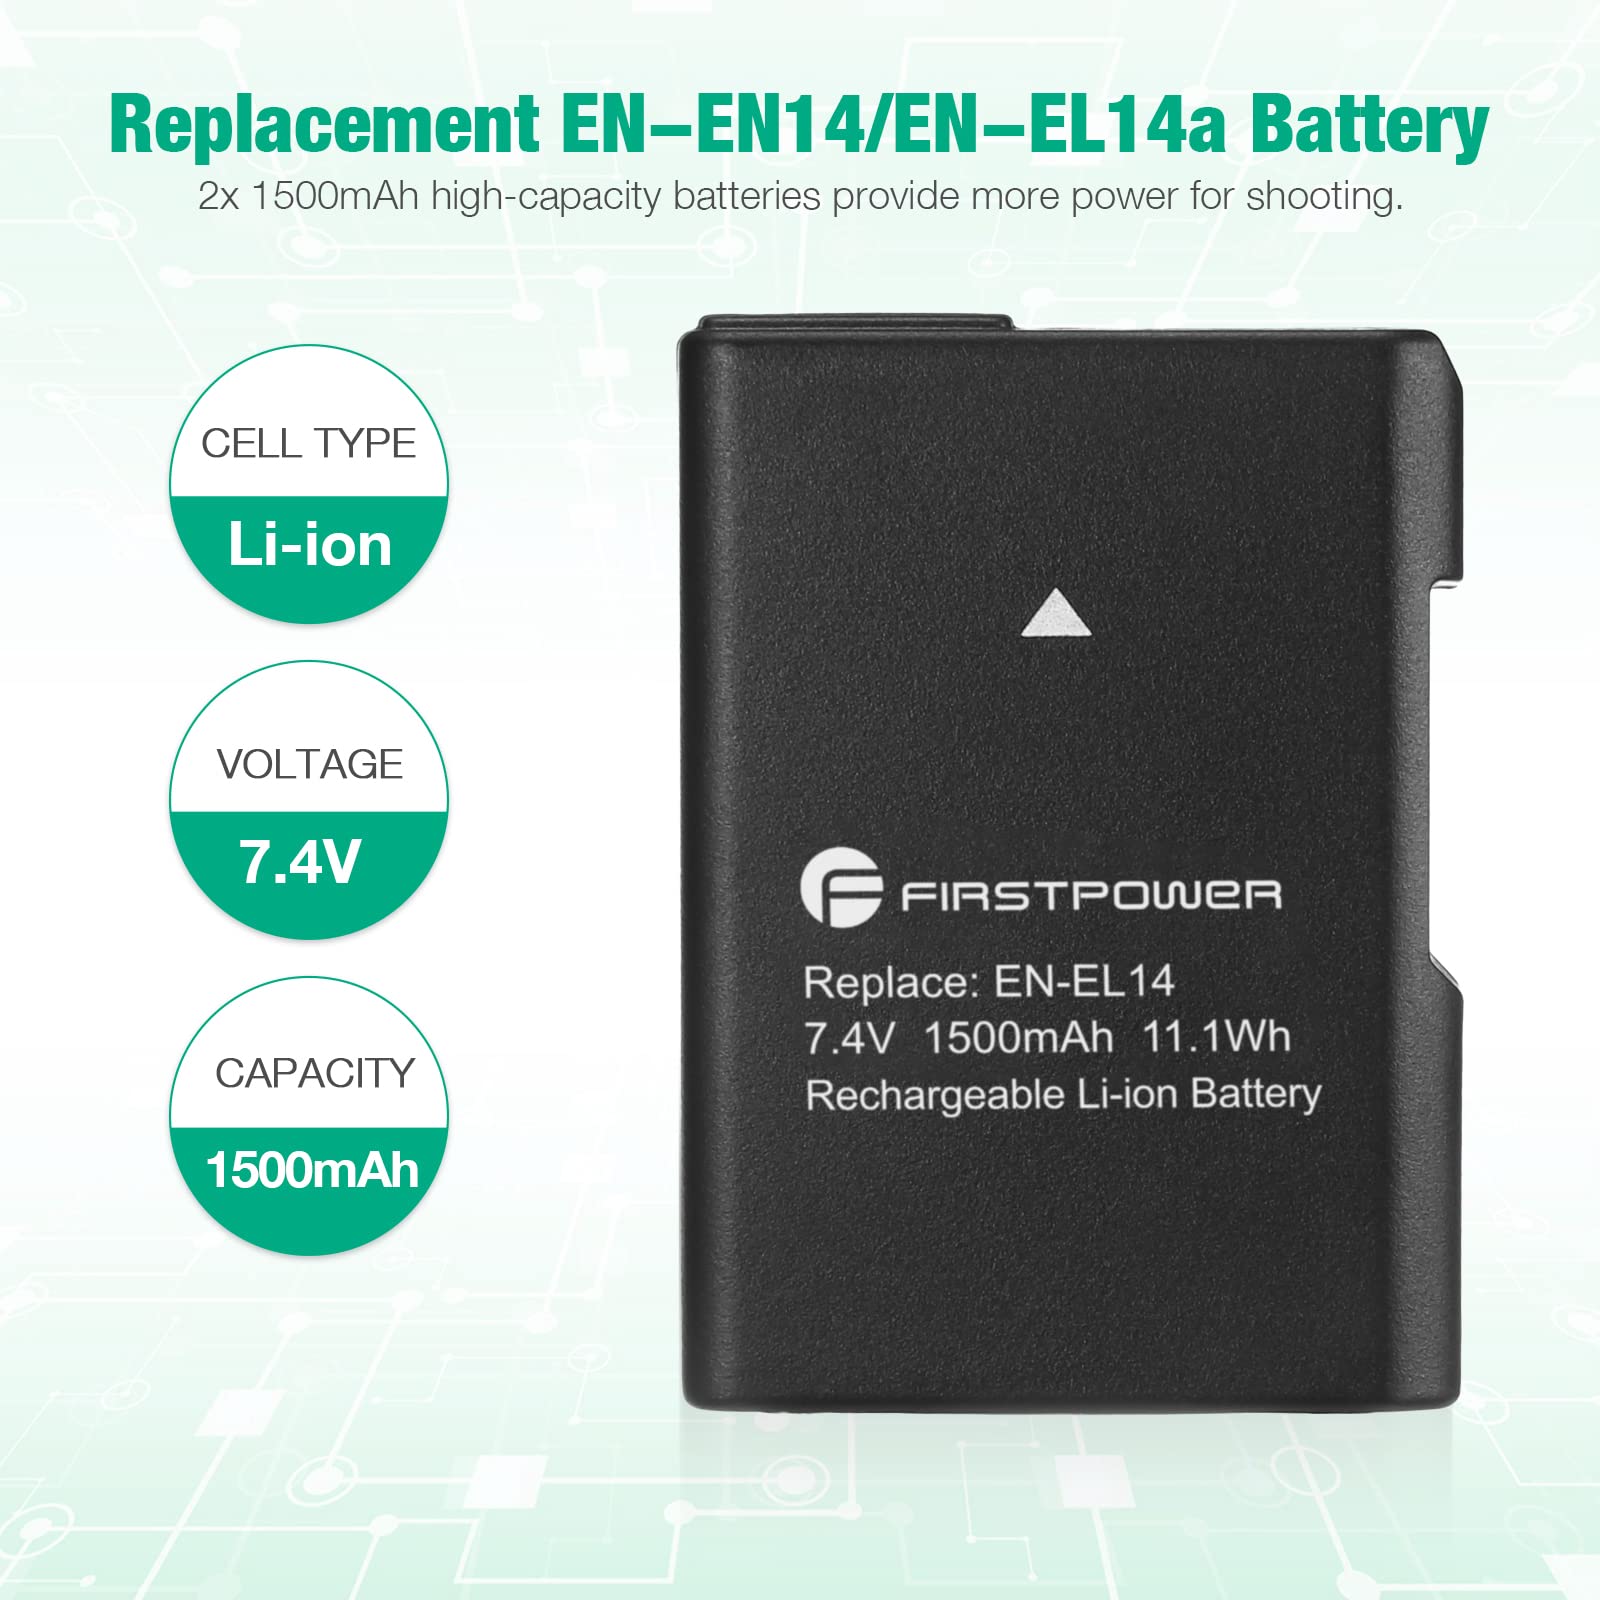 FirstPower EN-EL14 EN-EL14a Batteries for Nikon D3500 D3400 D3300 D3200 D3100 D5600 D5500 D5300 D5200 D5100 DF Coolpix P7000 P7100 P7700 P7800 (2-Pack, 1500mAh)